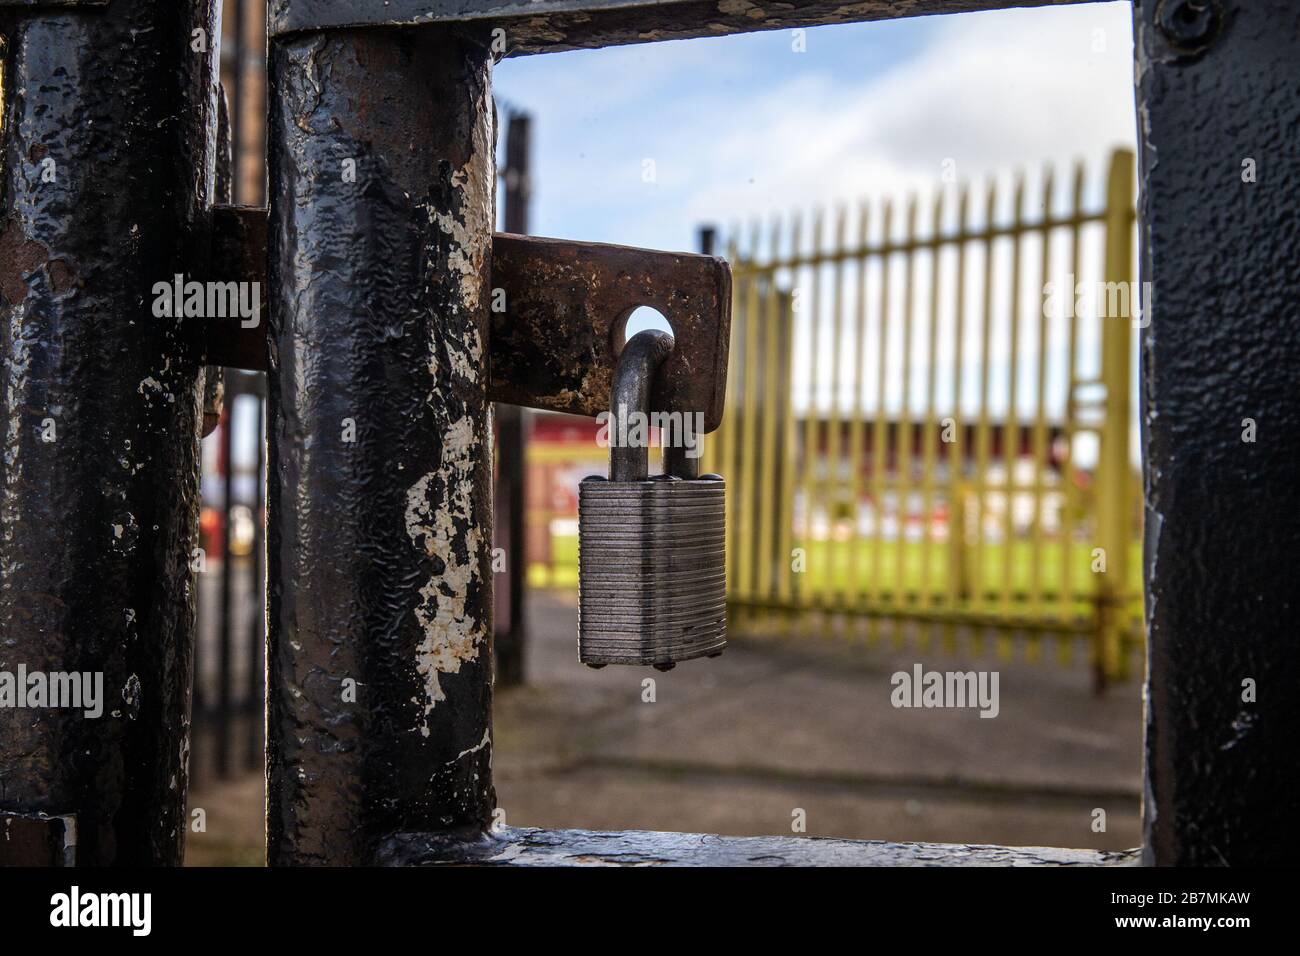 Gate at football stadium of Stevenage FC, Lamex Stadium, Stevenage, Hertfordshire UK shut and padlocked closed during Coronavirus pandemic Stock Photo